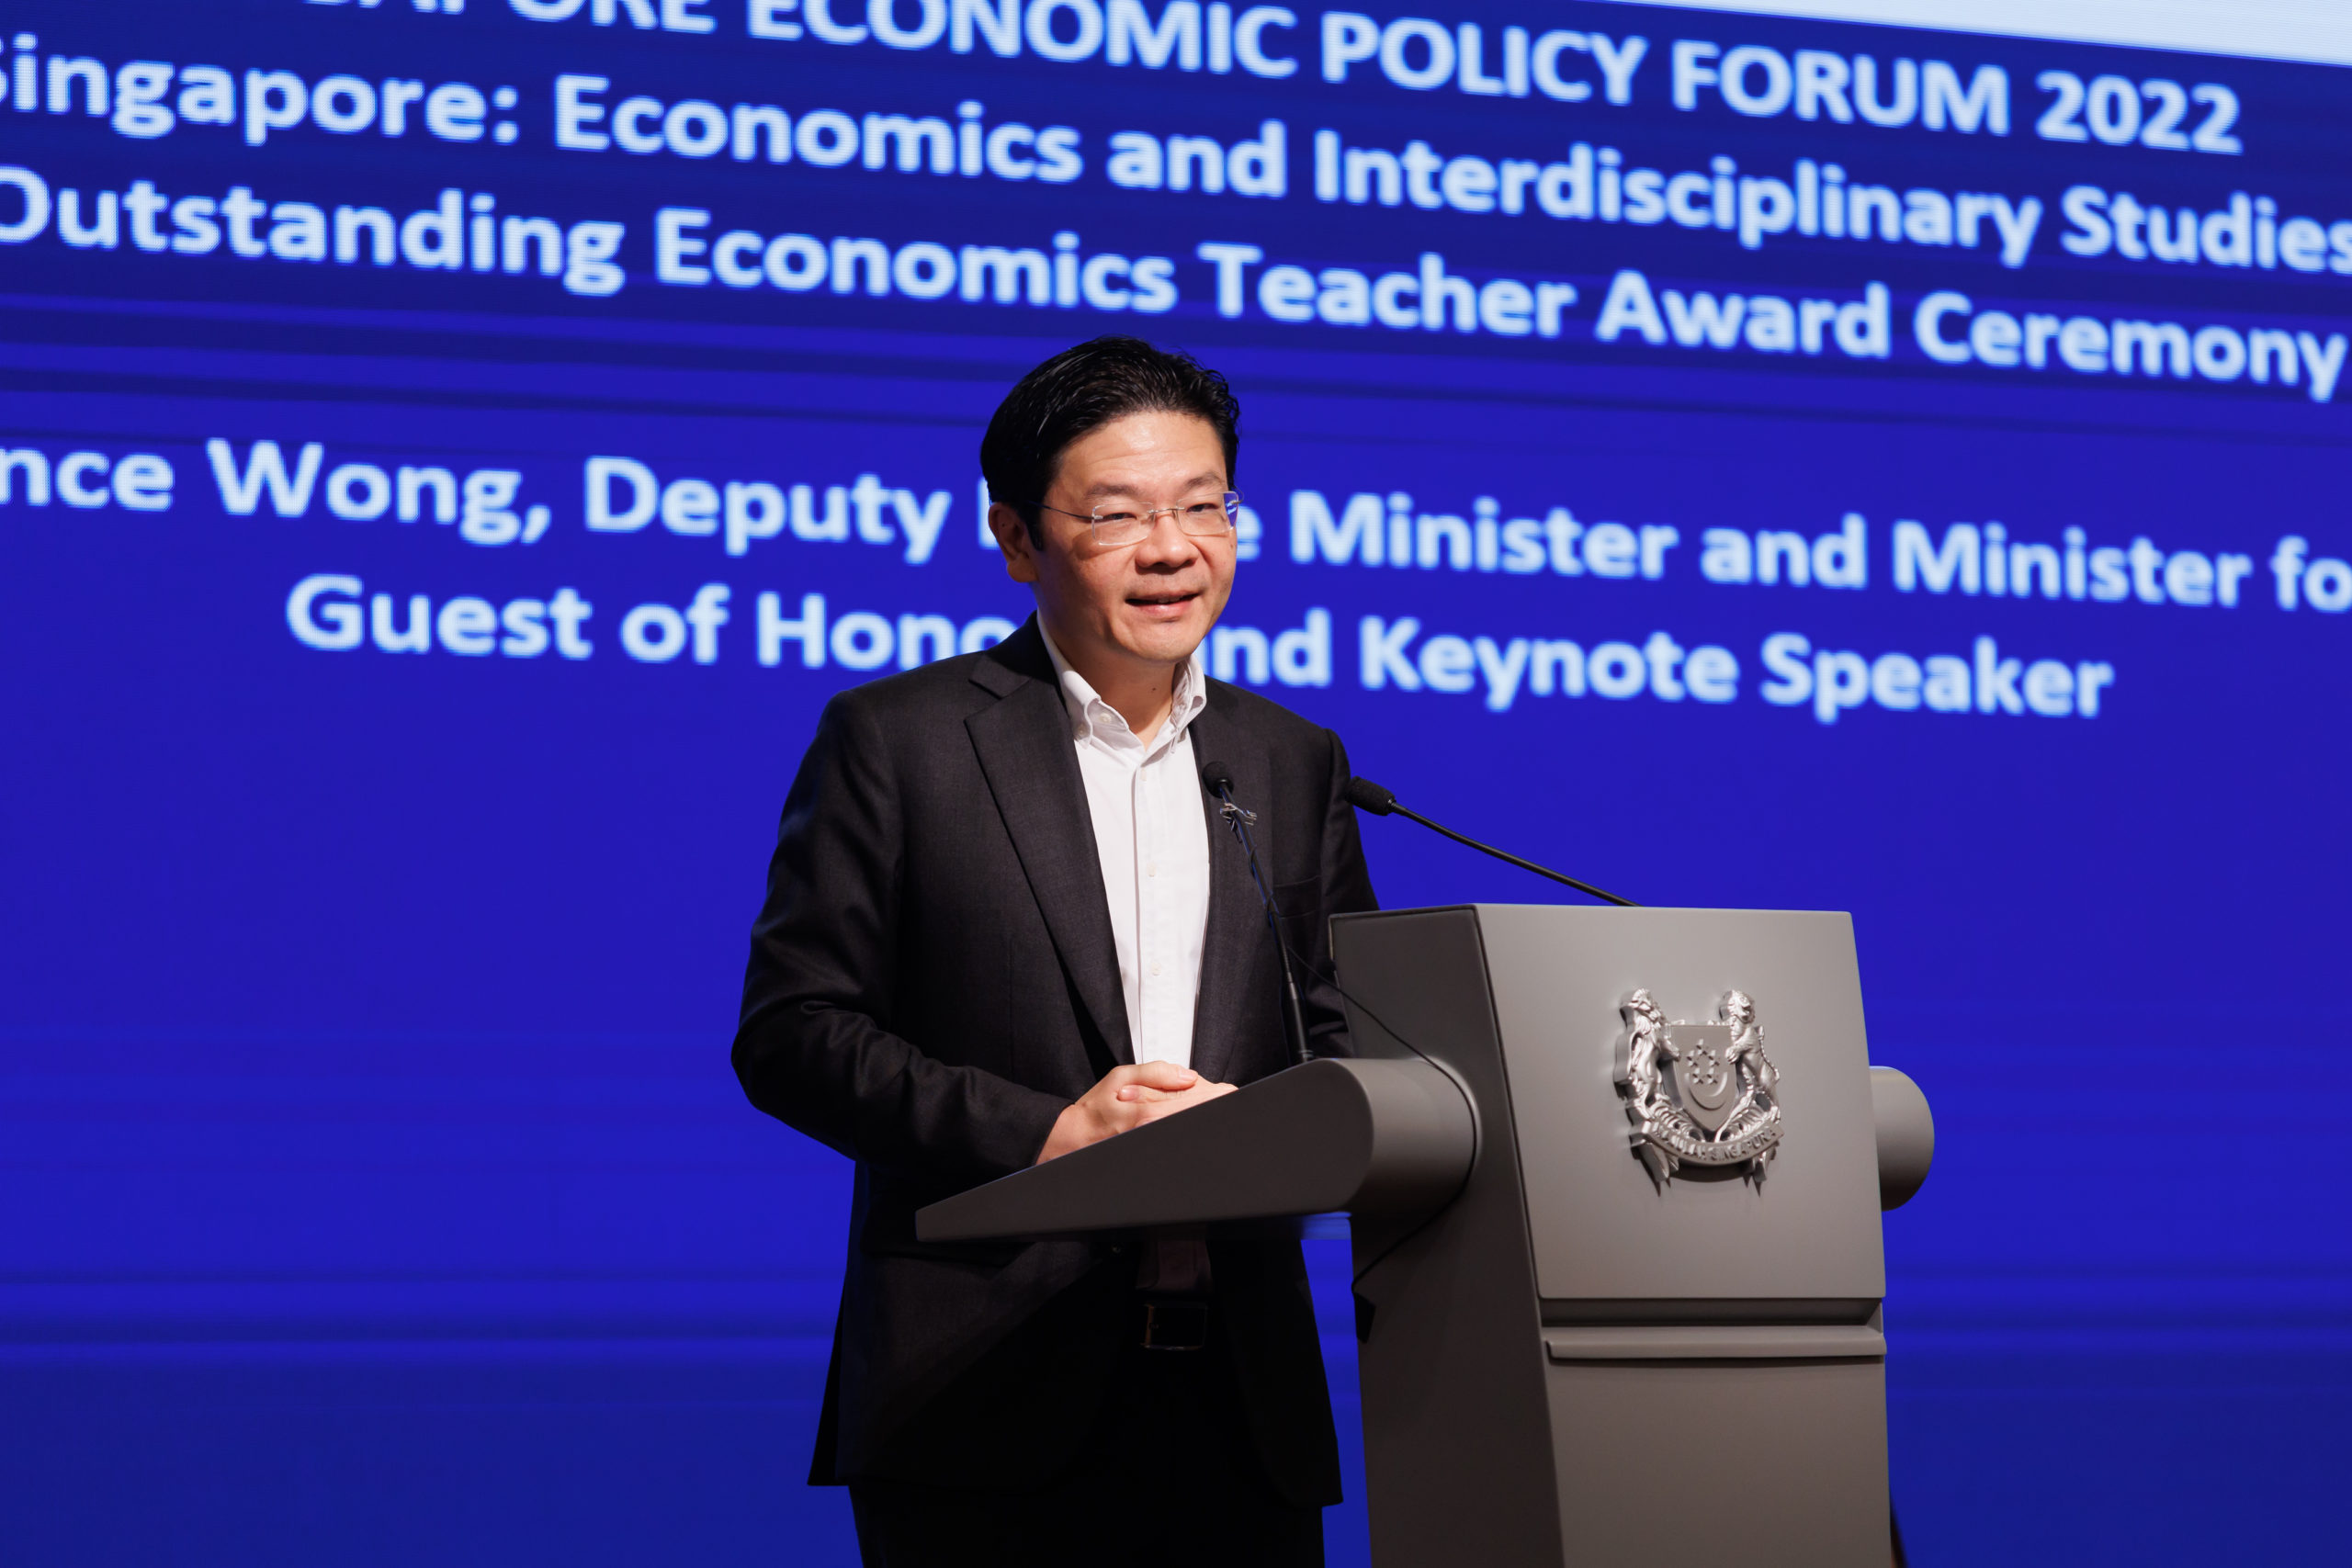 Singapore Economic Policy Forum 2022